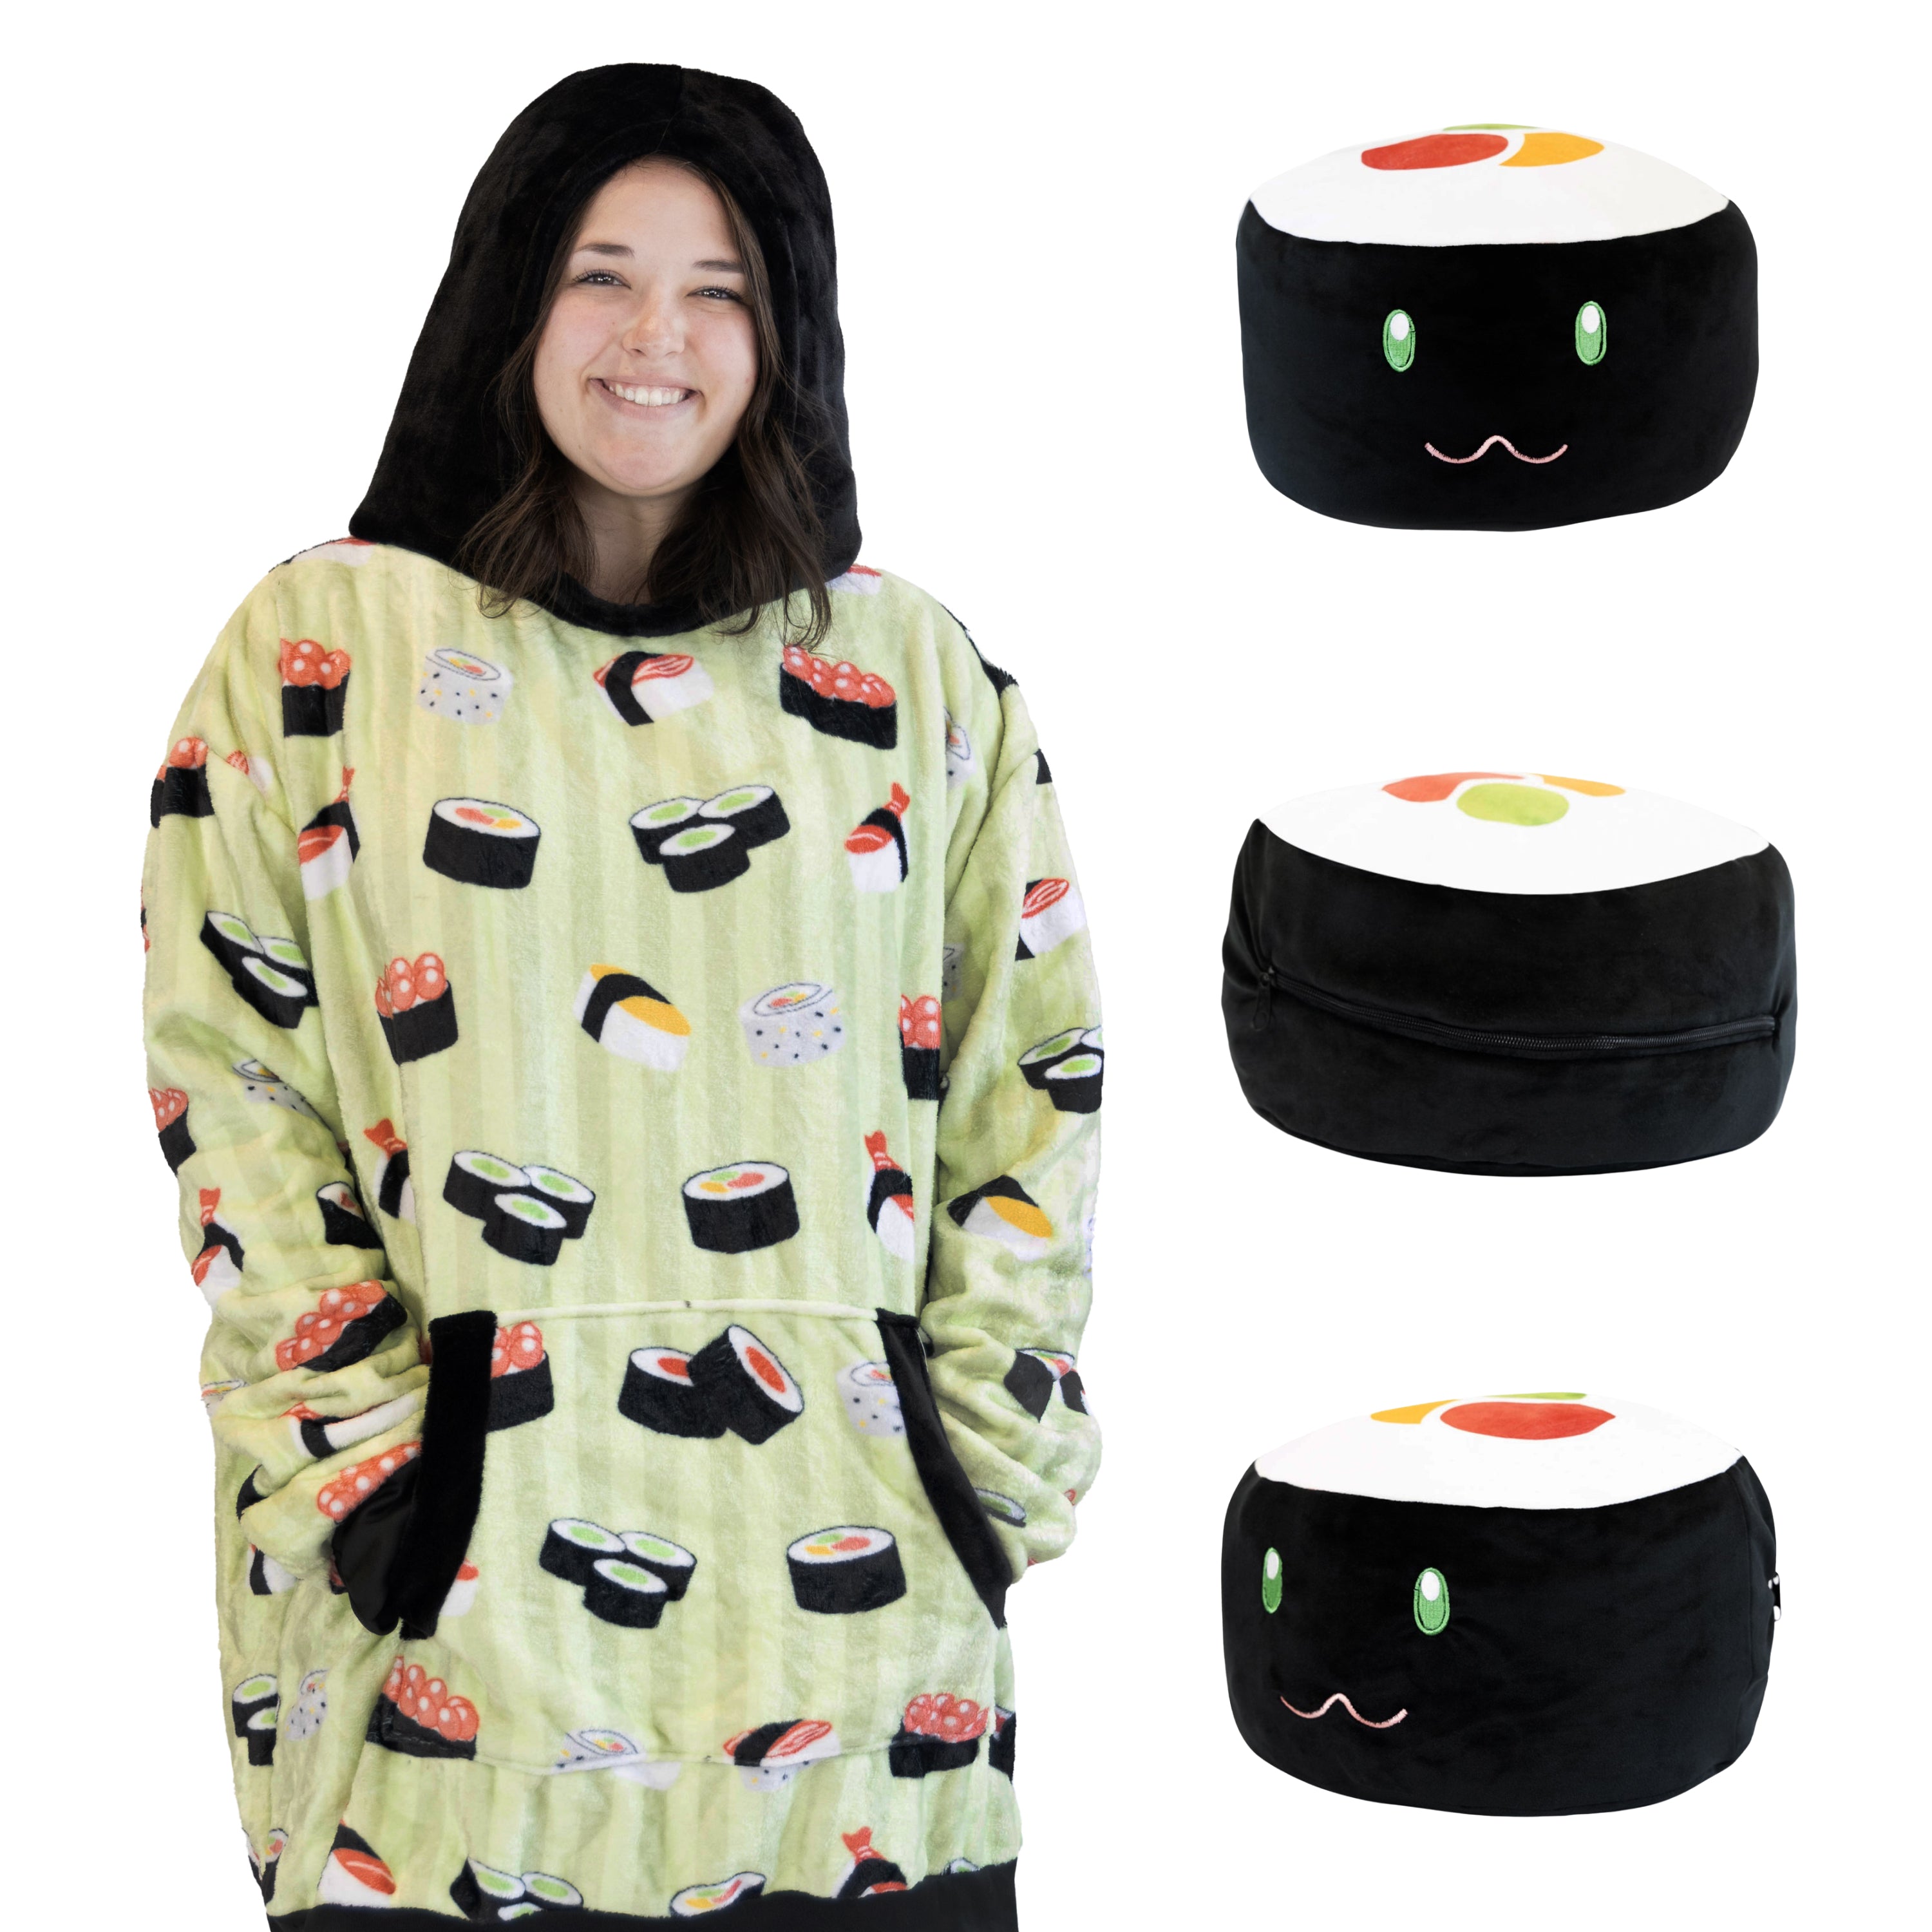 Sushi Snugible 2-in-1 Blanket Hoodie & Pillow